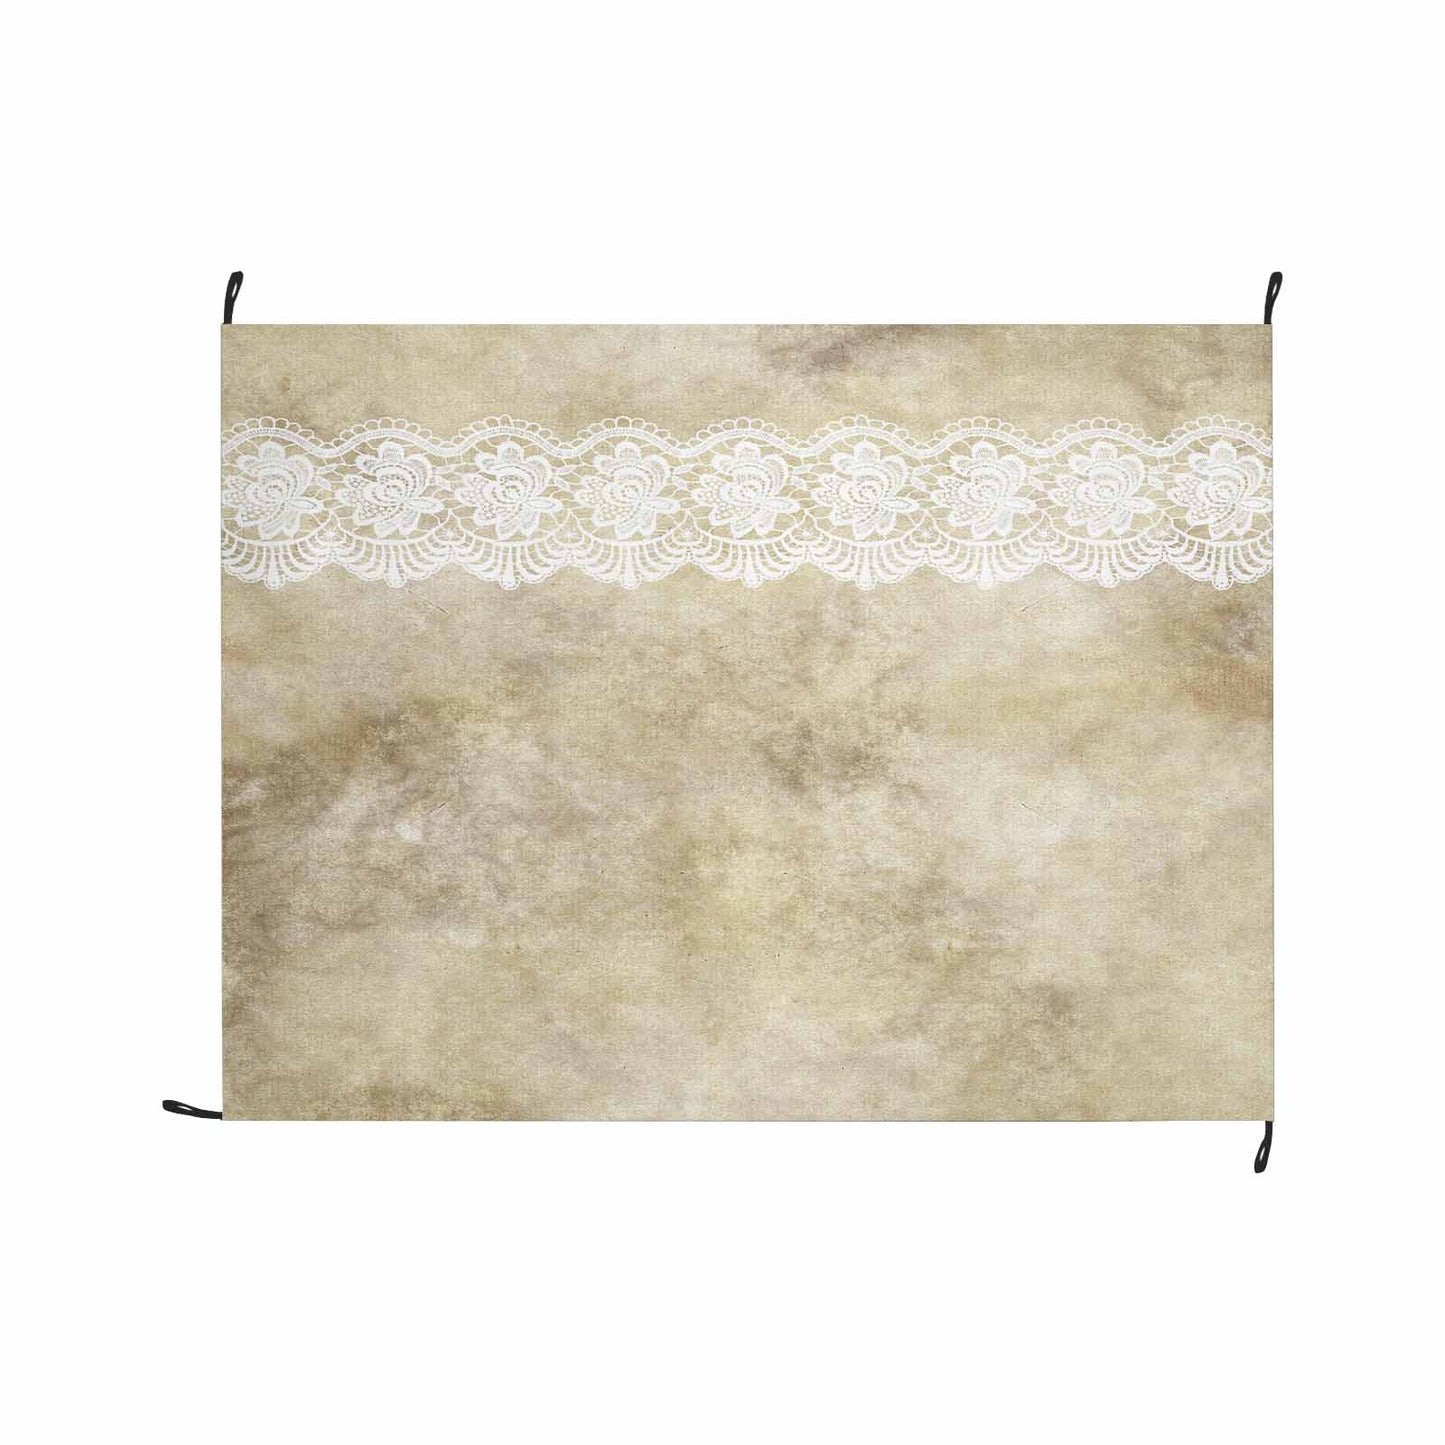 Victorian lace print waterproof picnic mat, 69 x 55in, design 28